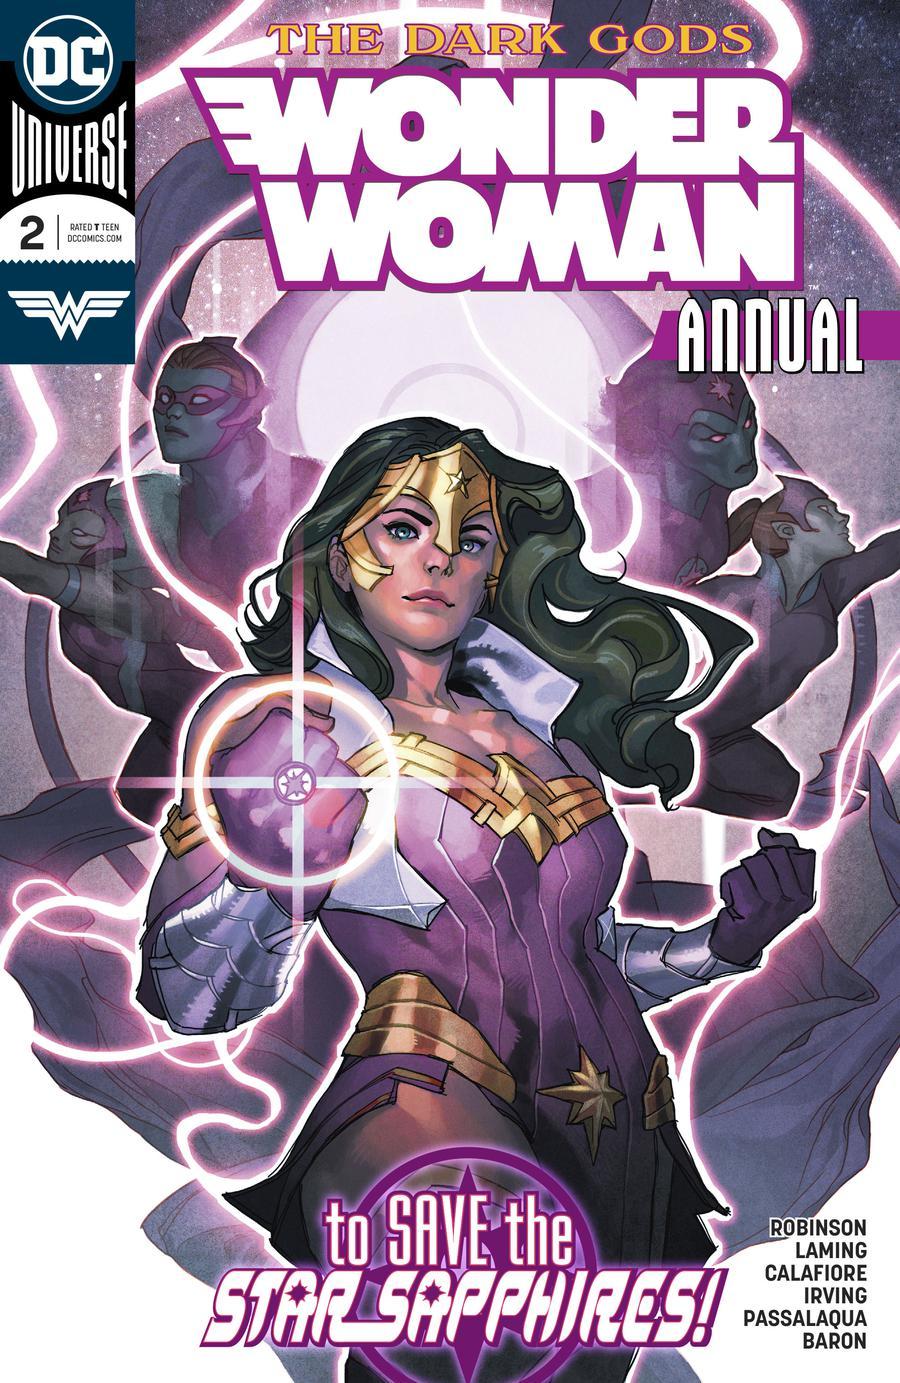 Wonder Woman Vol. 5 Annual #2